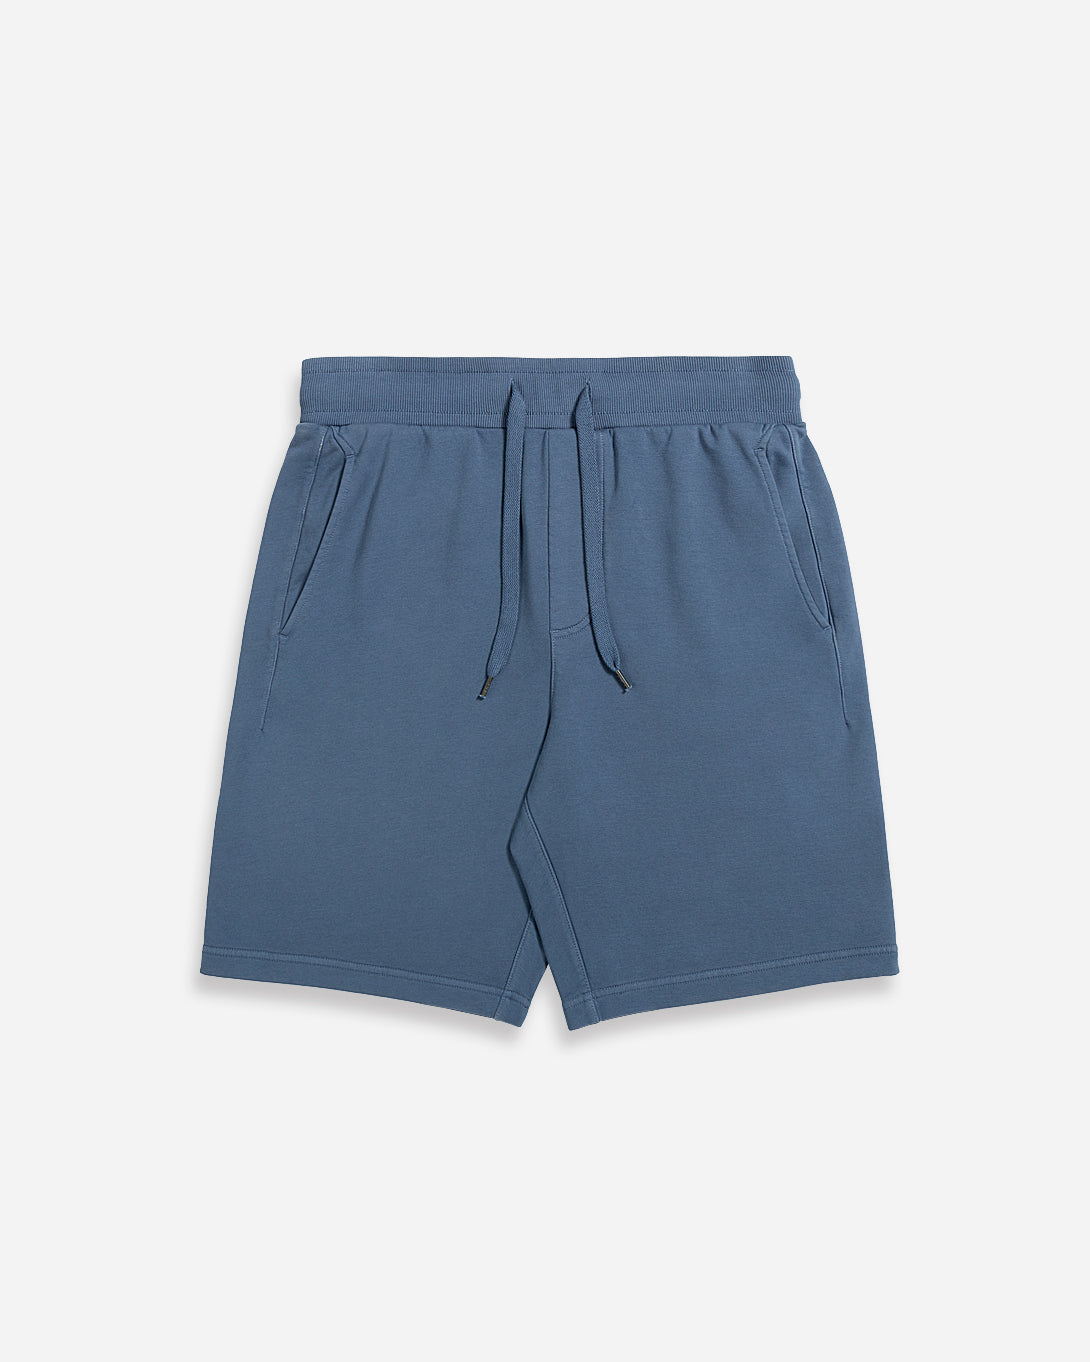 China Blue Men's Bklyn Shorts